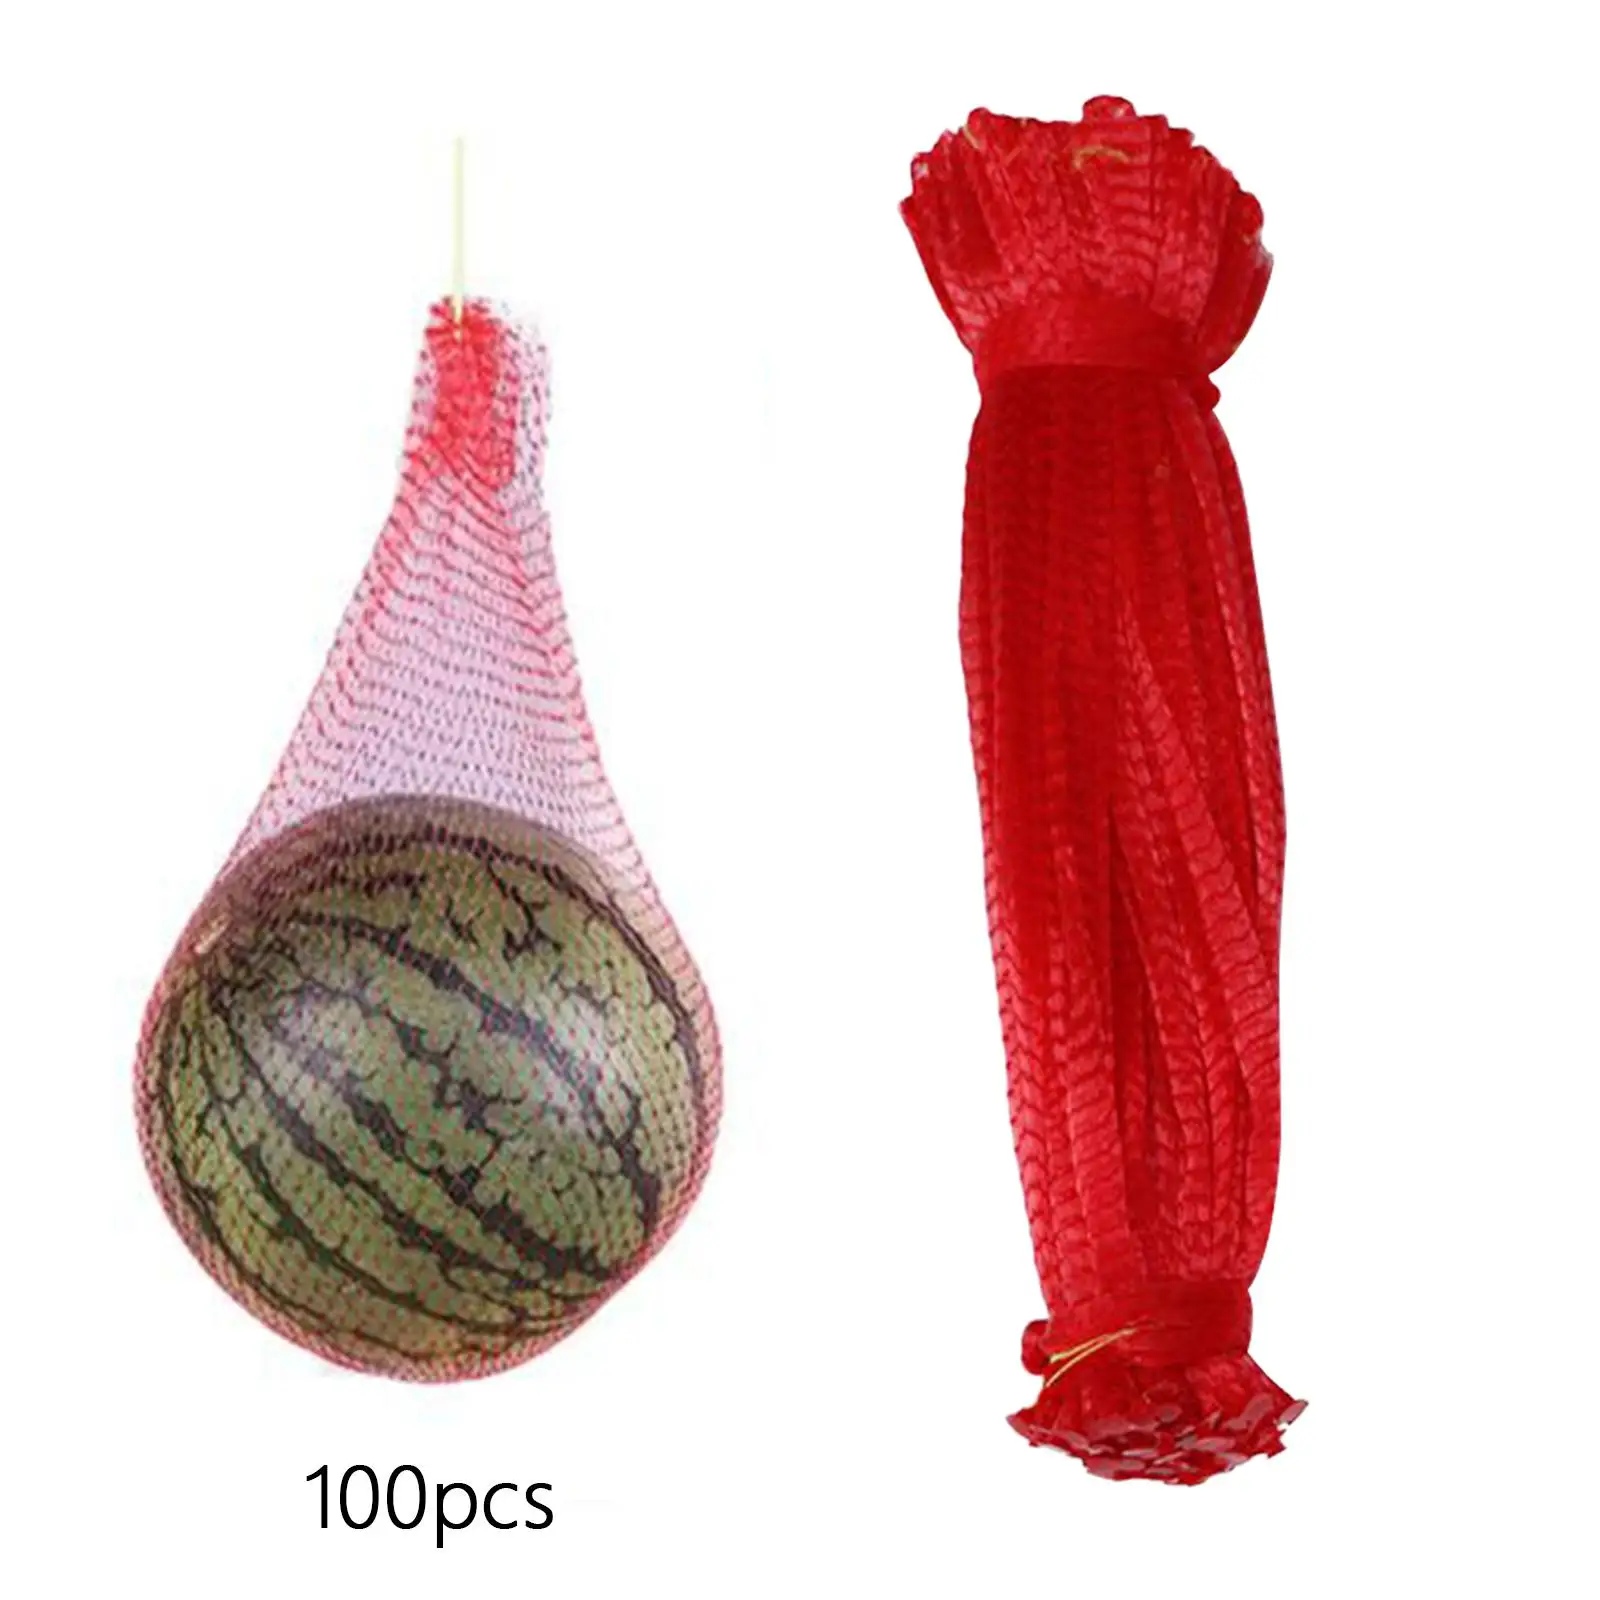 100 Pieces Hanging Watermelon Net Bags Melon Mesh Bags for Garden Gardening